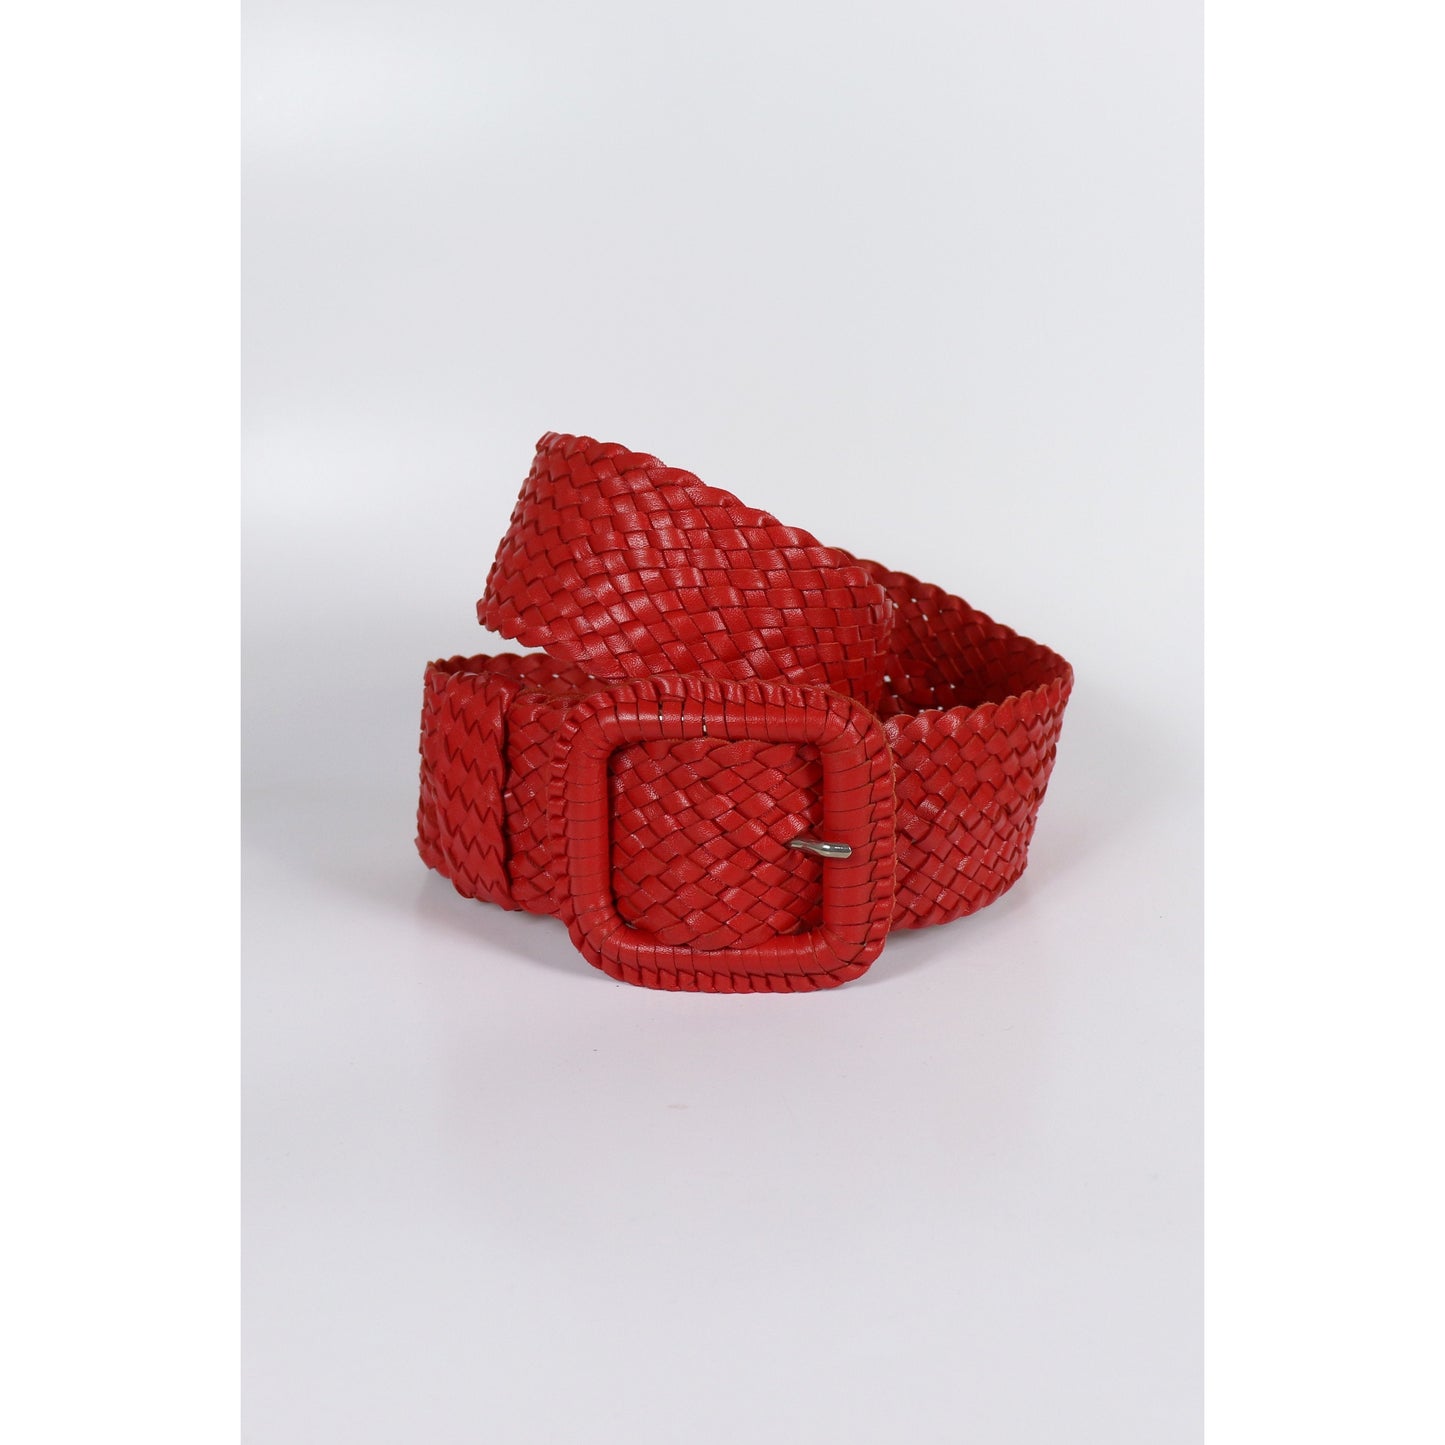 Red woven belt on white